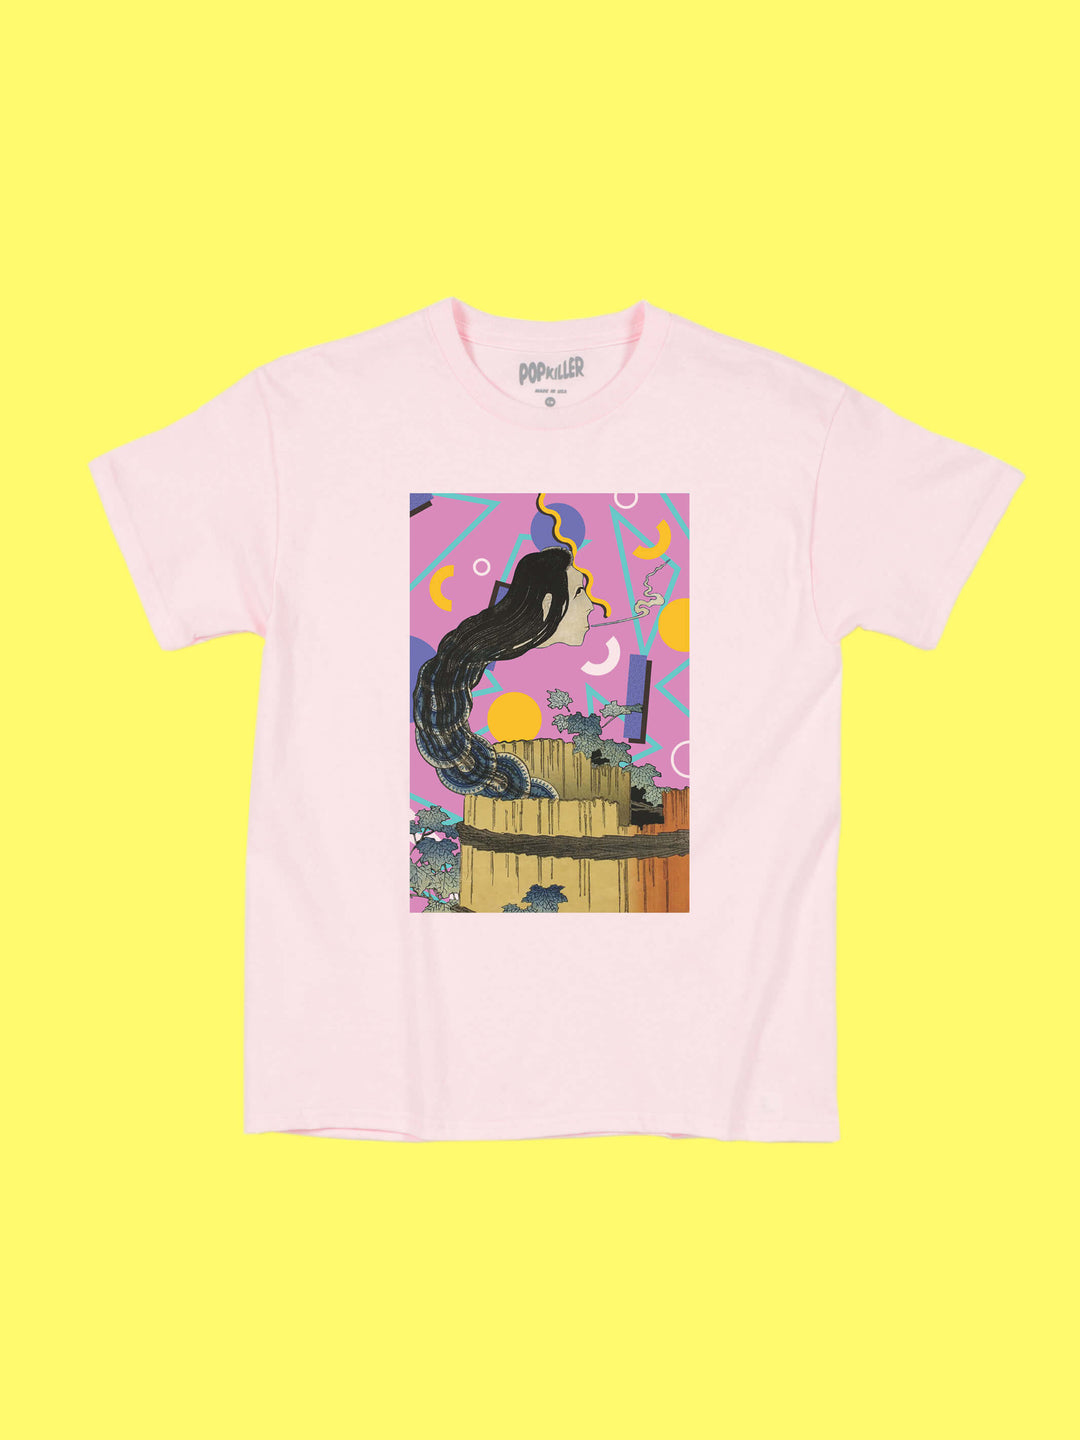 Pink aesthetic yokai graphic t-shirt.